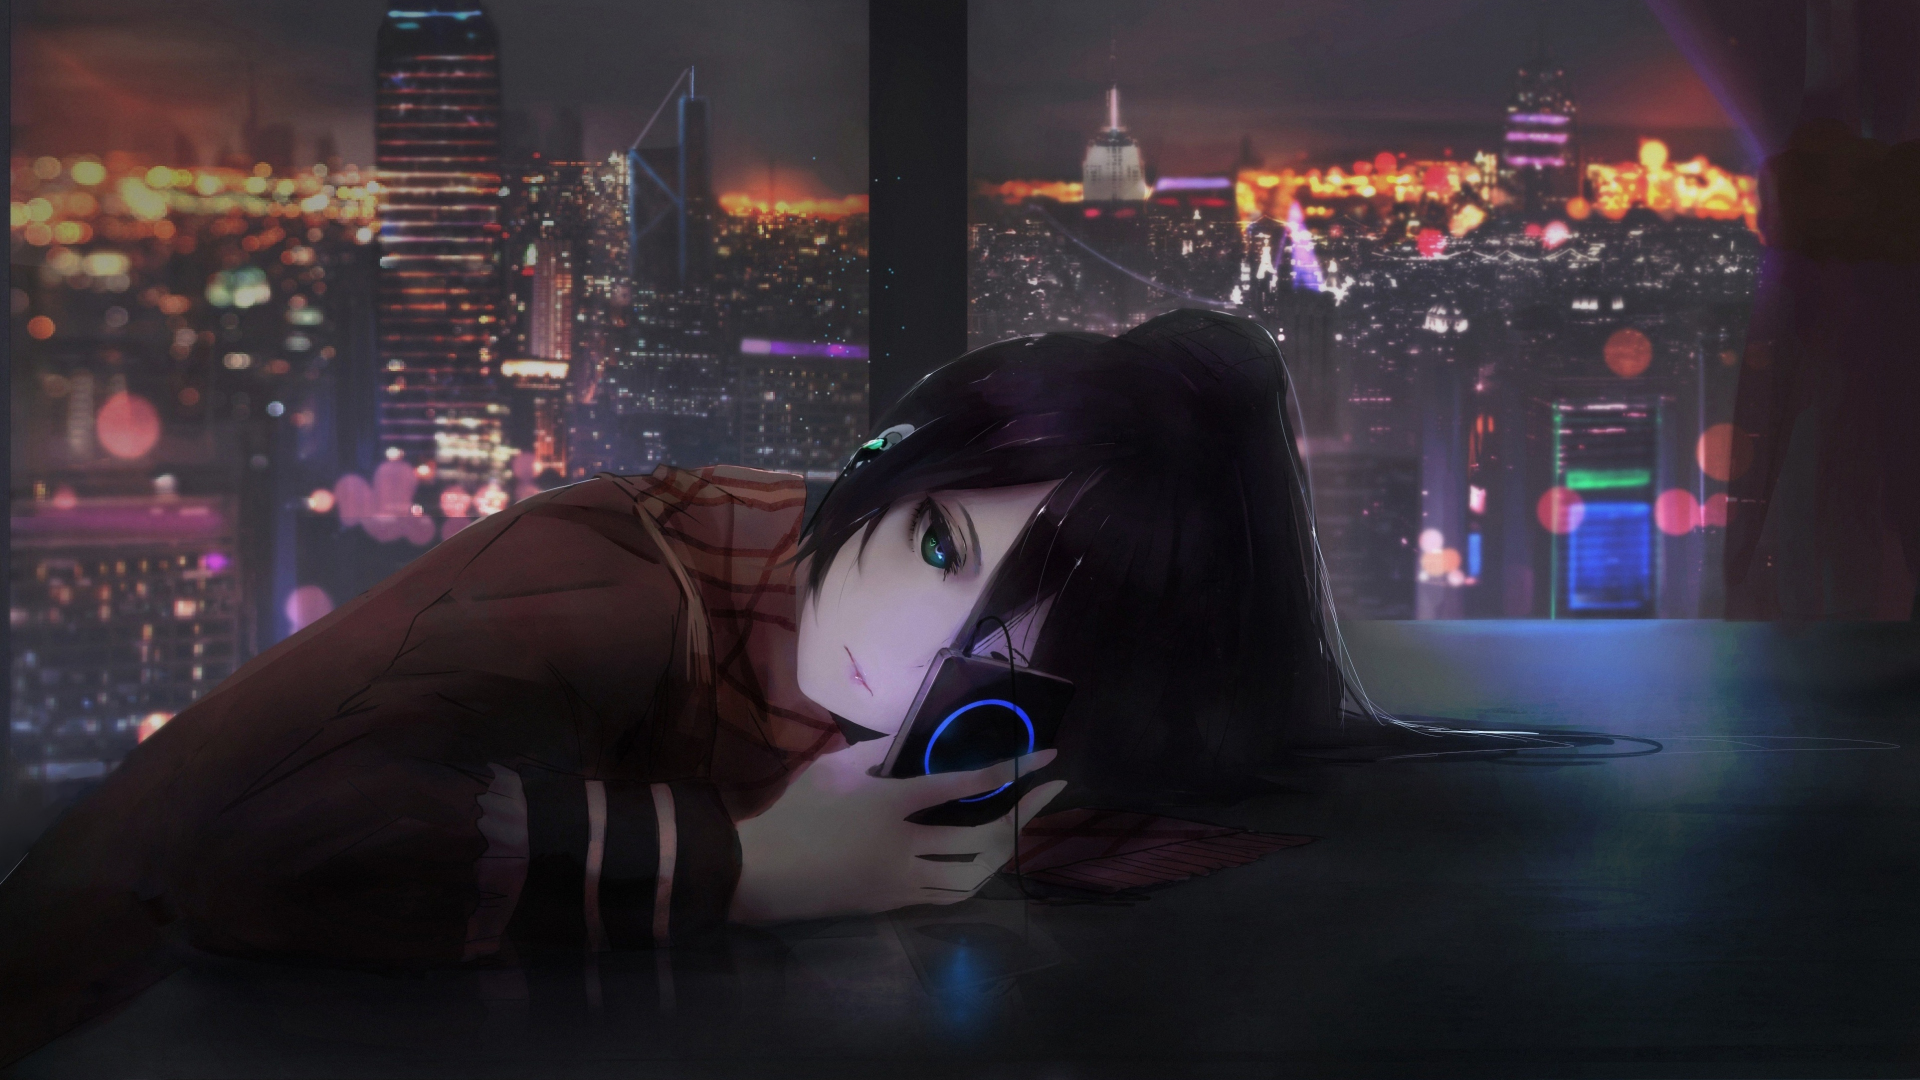 Download Wallpaper 1920x1080 Anime Girl Using Phone Cityscape Night Cute Art Full Hd Hdtv 